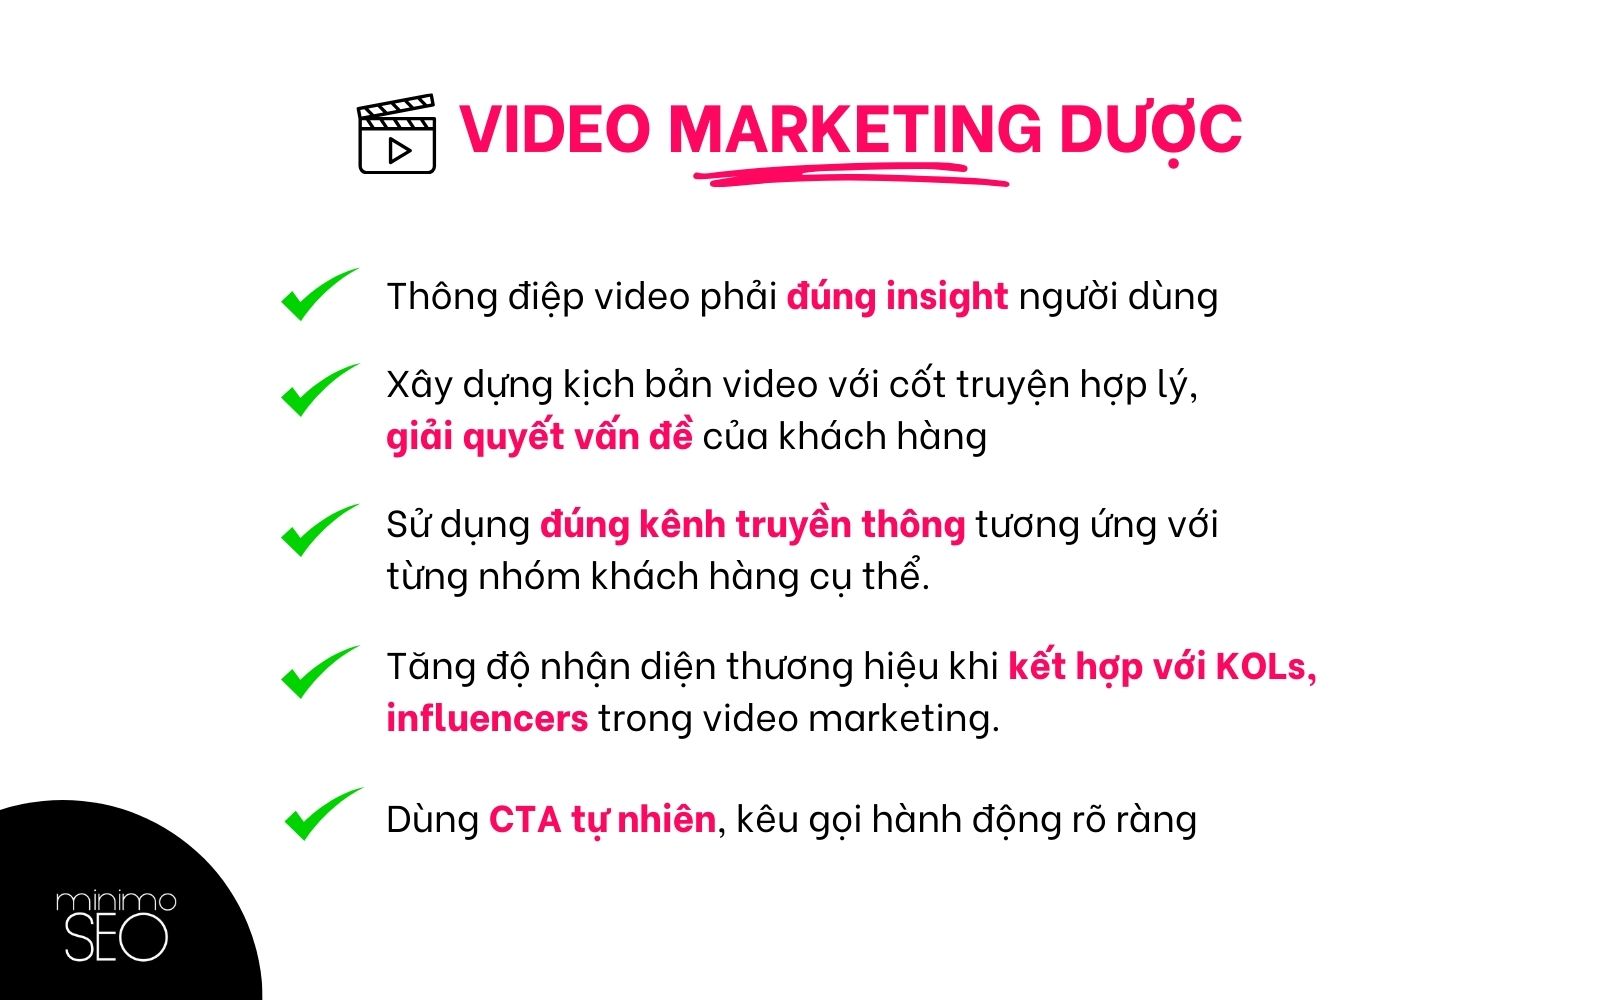 Video Marketing Dược